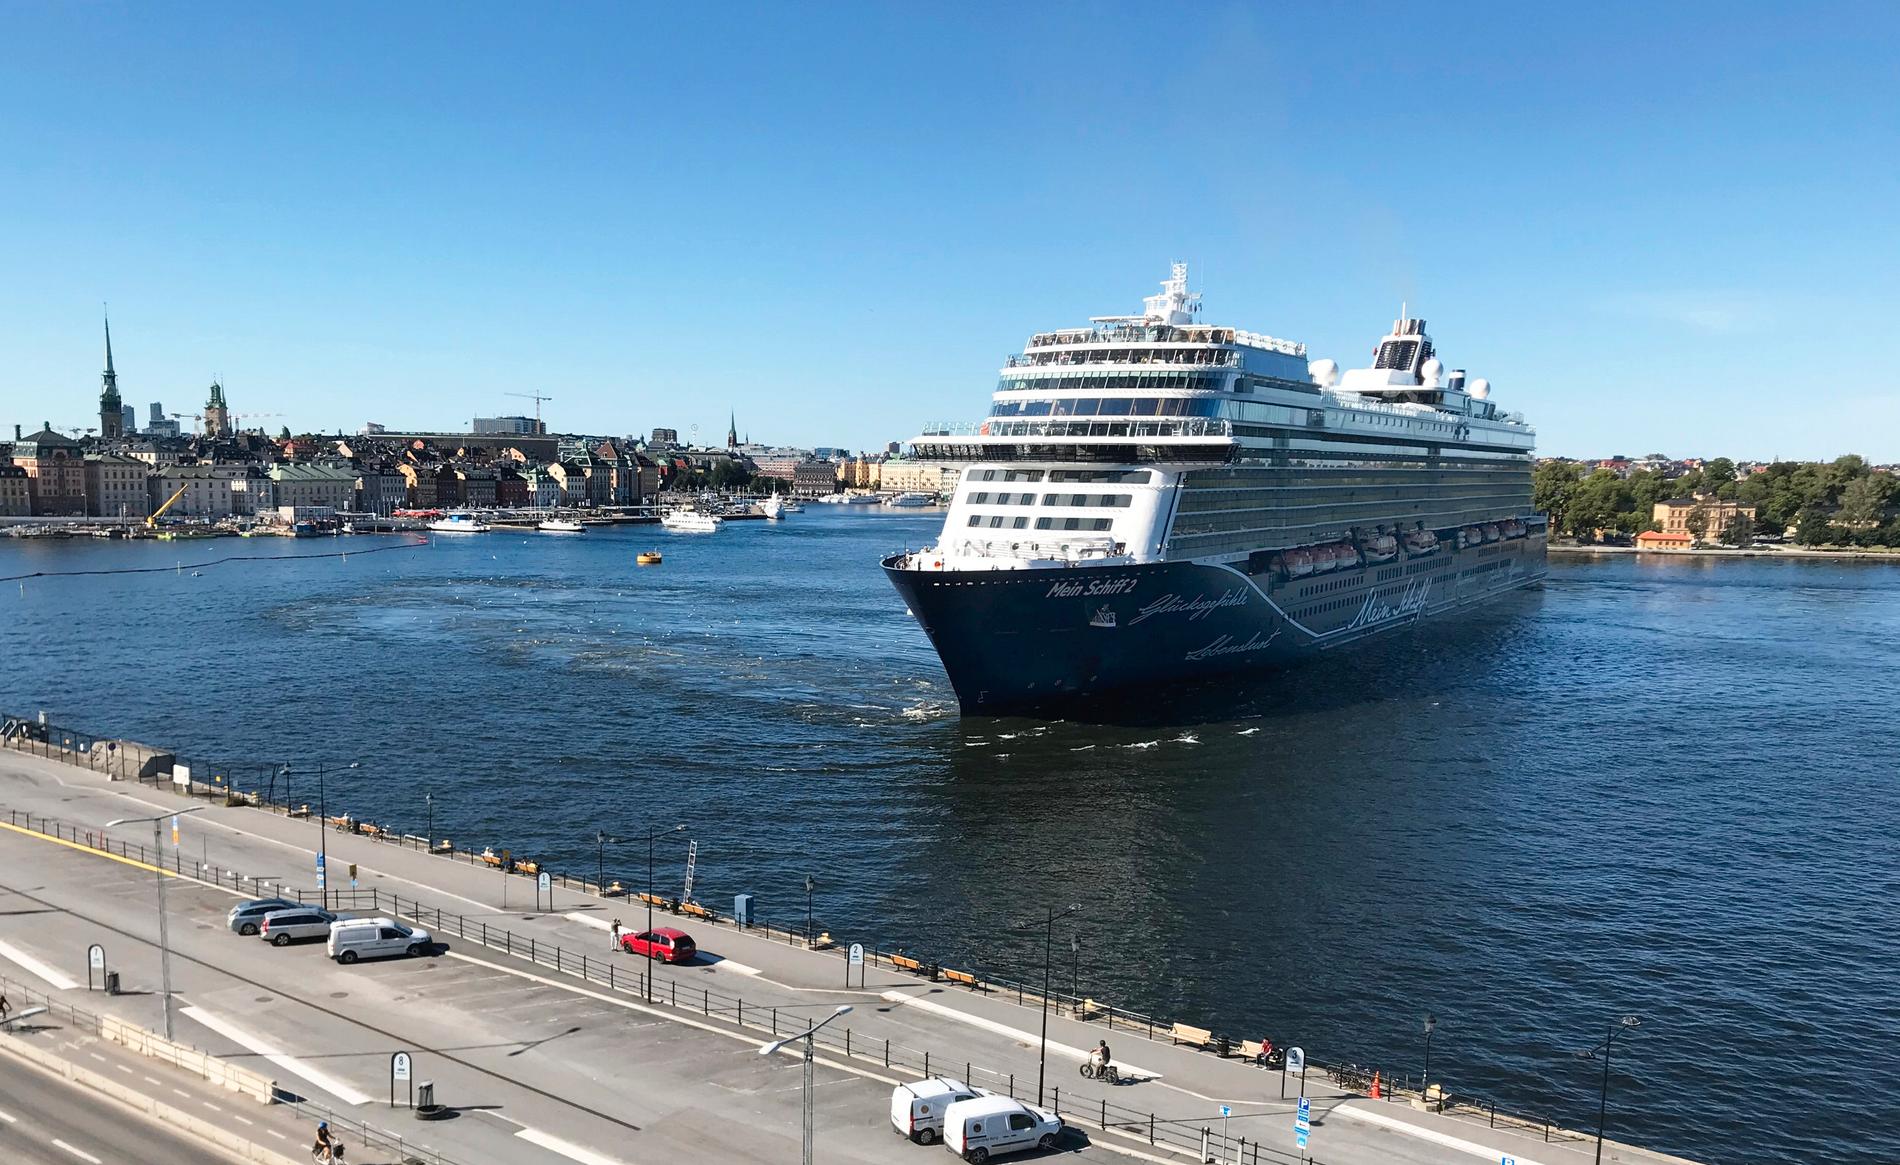 Tuis fartyg Mein Schiff var i måndags ute på "scenic view" med en timmes stopp i Stockholm. Under fredagen kom fartyget Europa 2 in – men stannade inte, utan vände om.